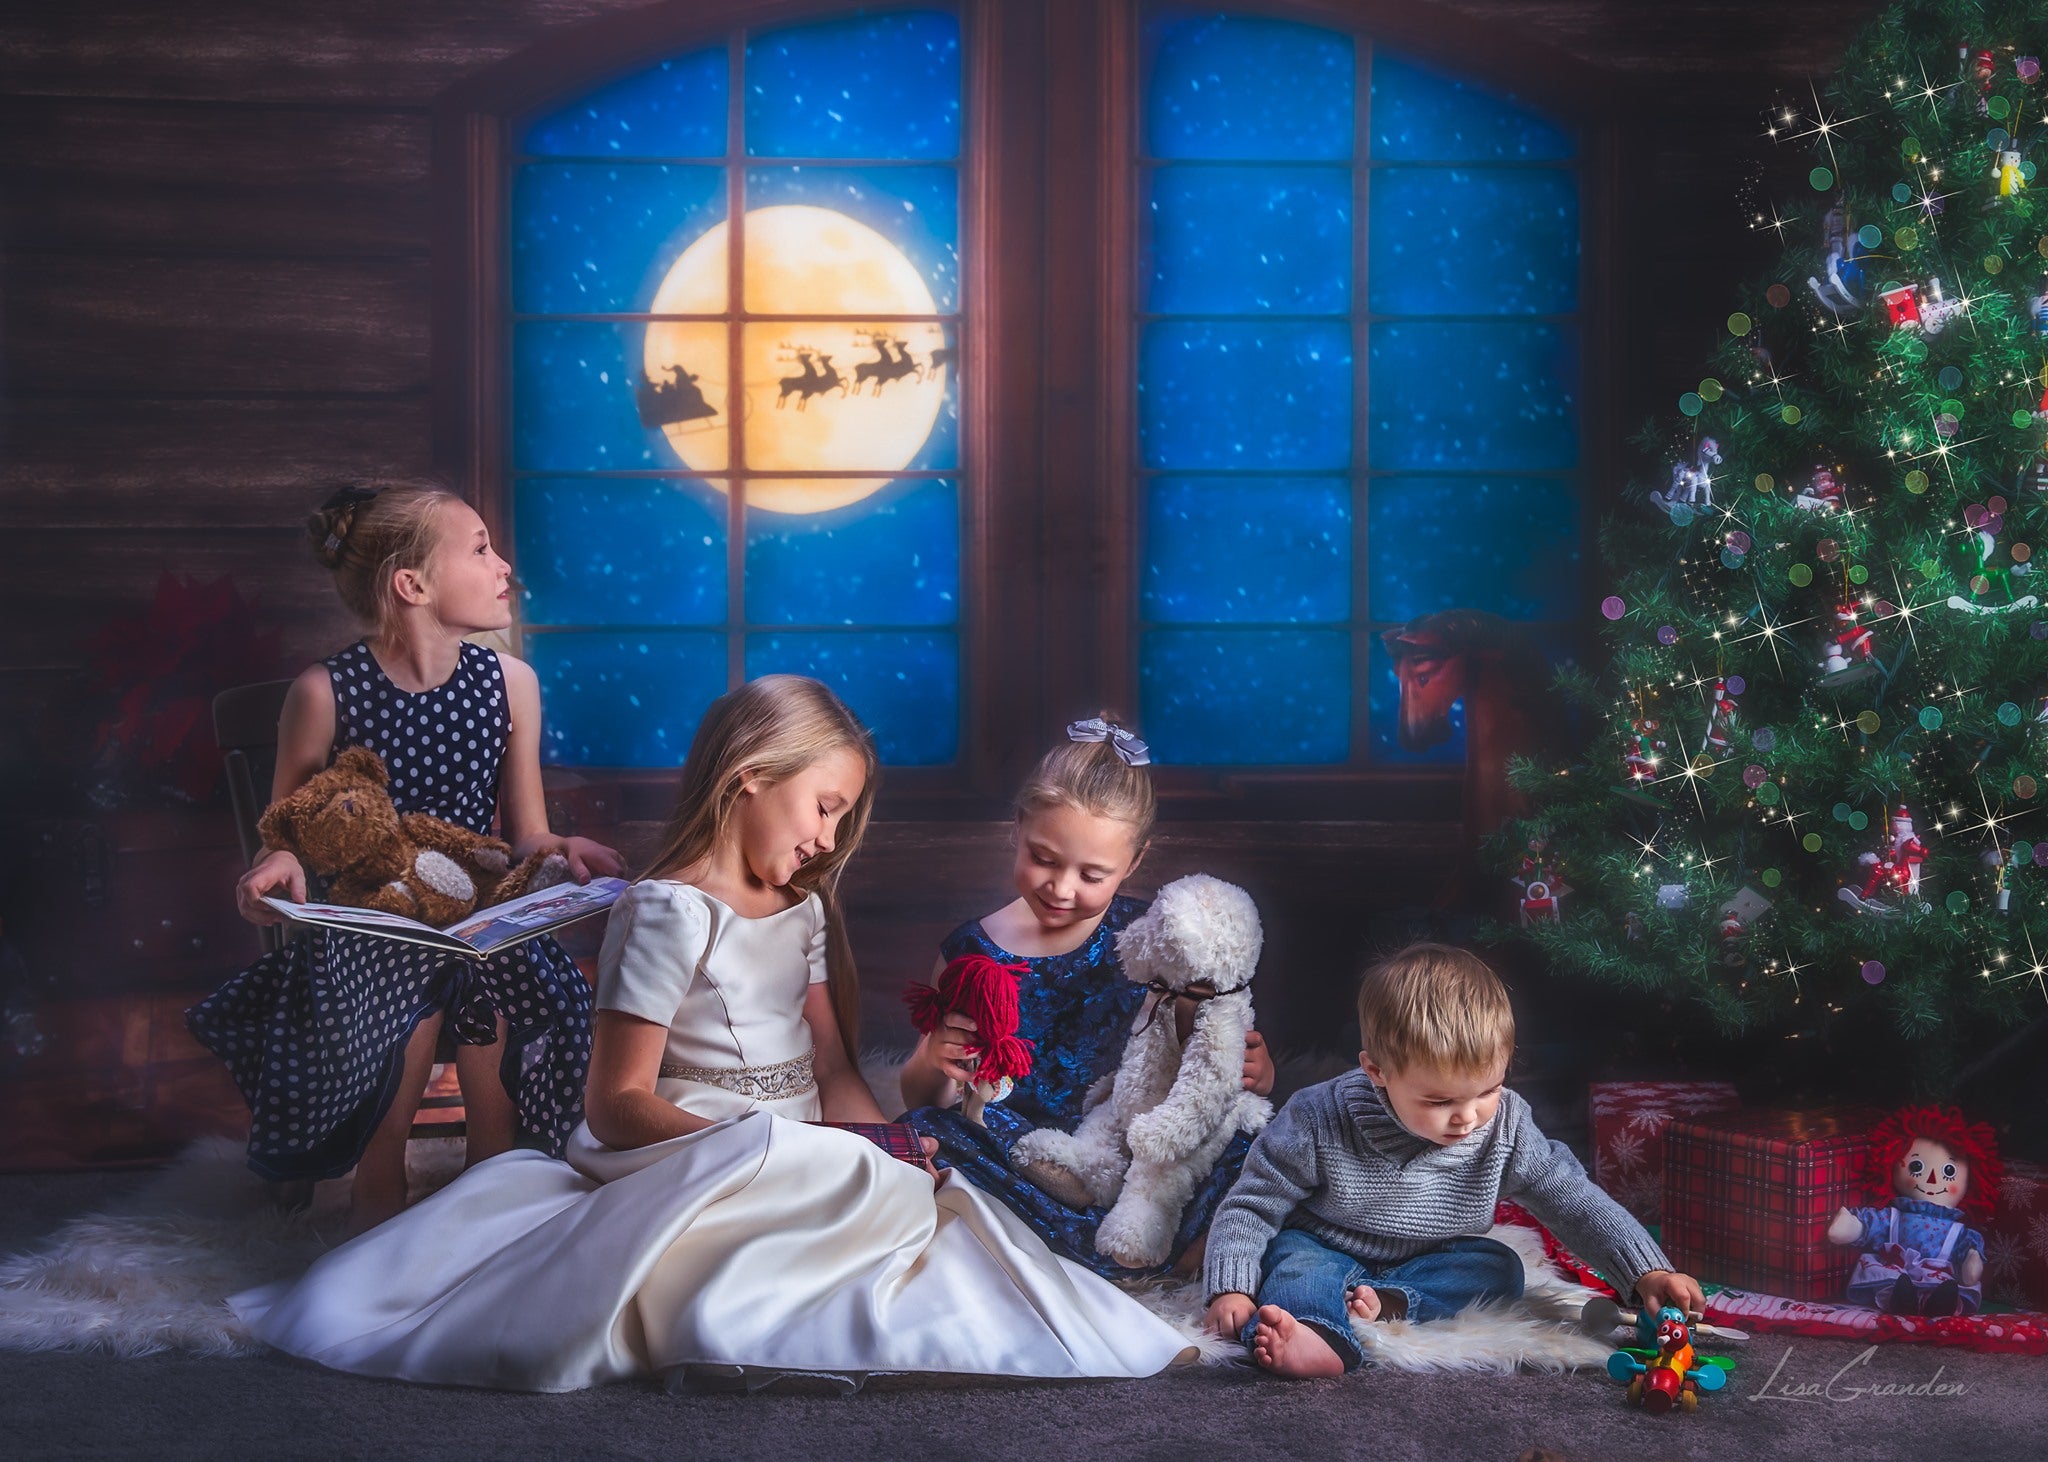 Kate Christmas Tree Santa Window Backdrop for Photography Designed by Lisa Granden